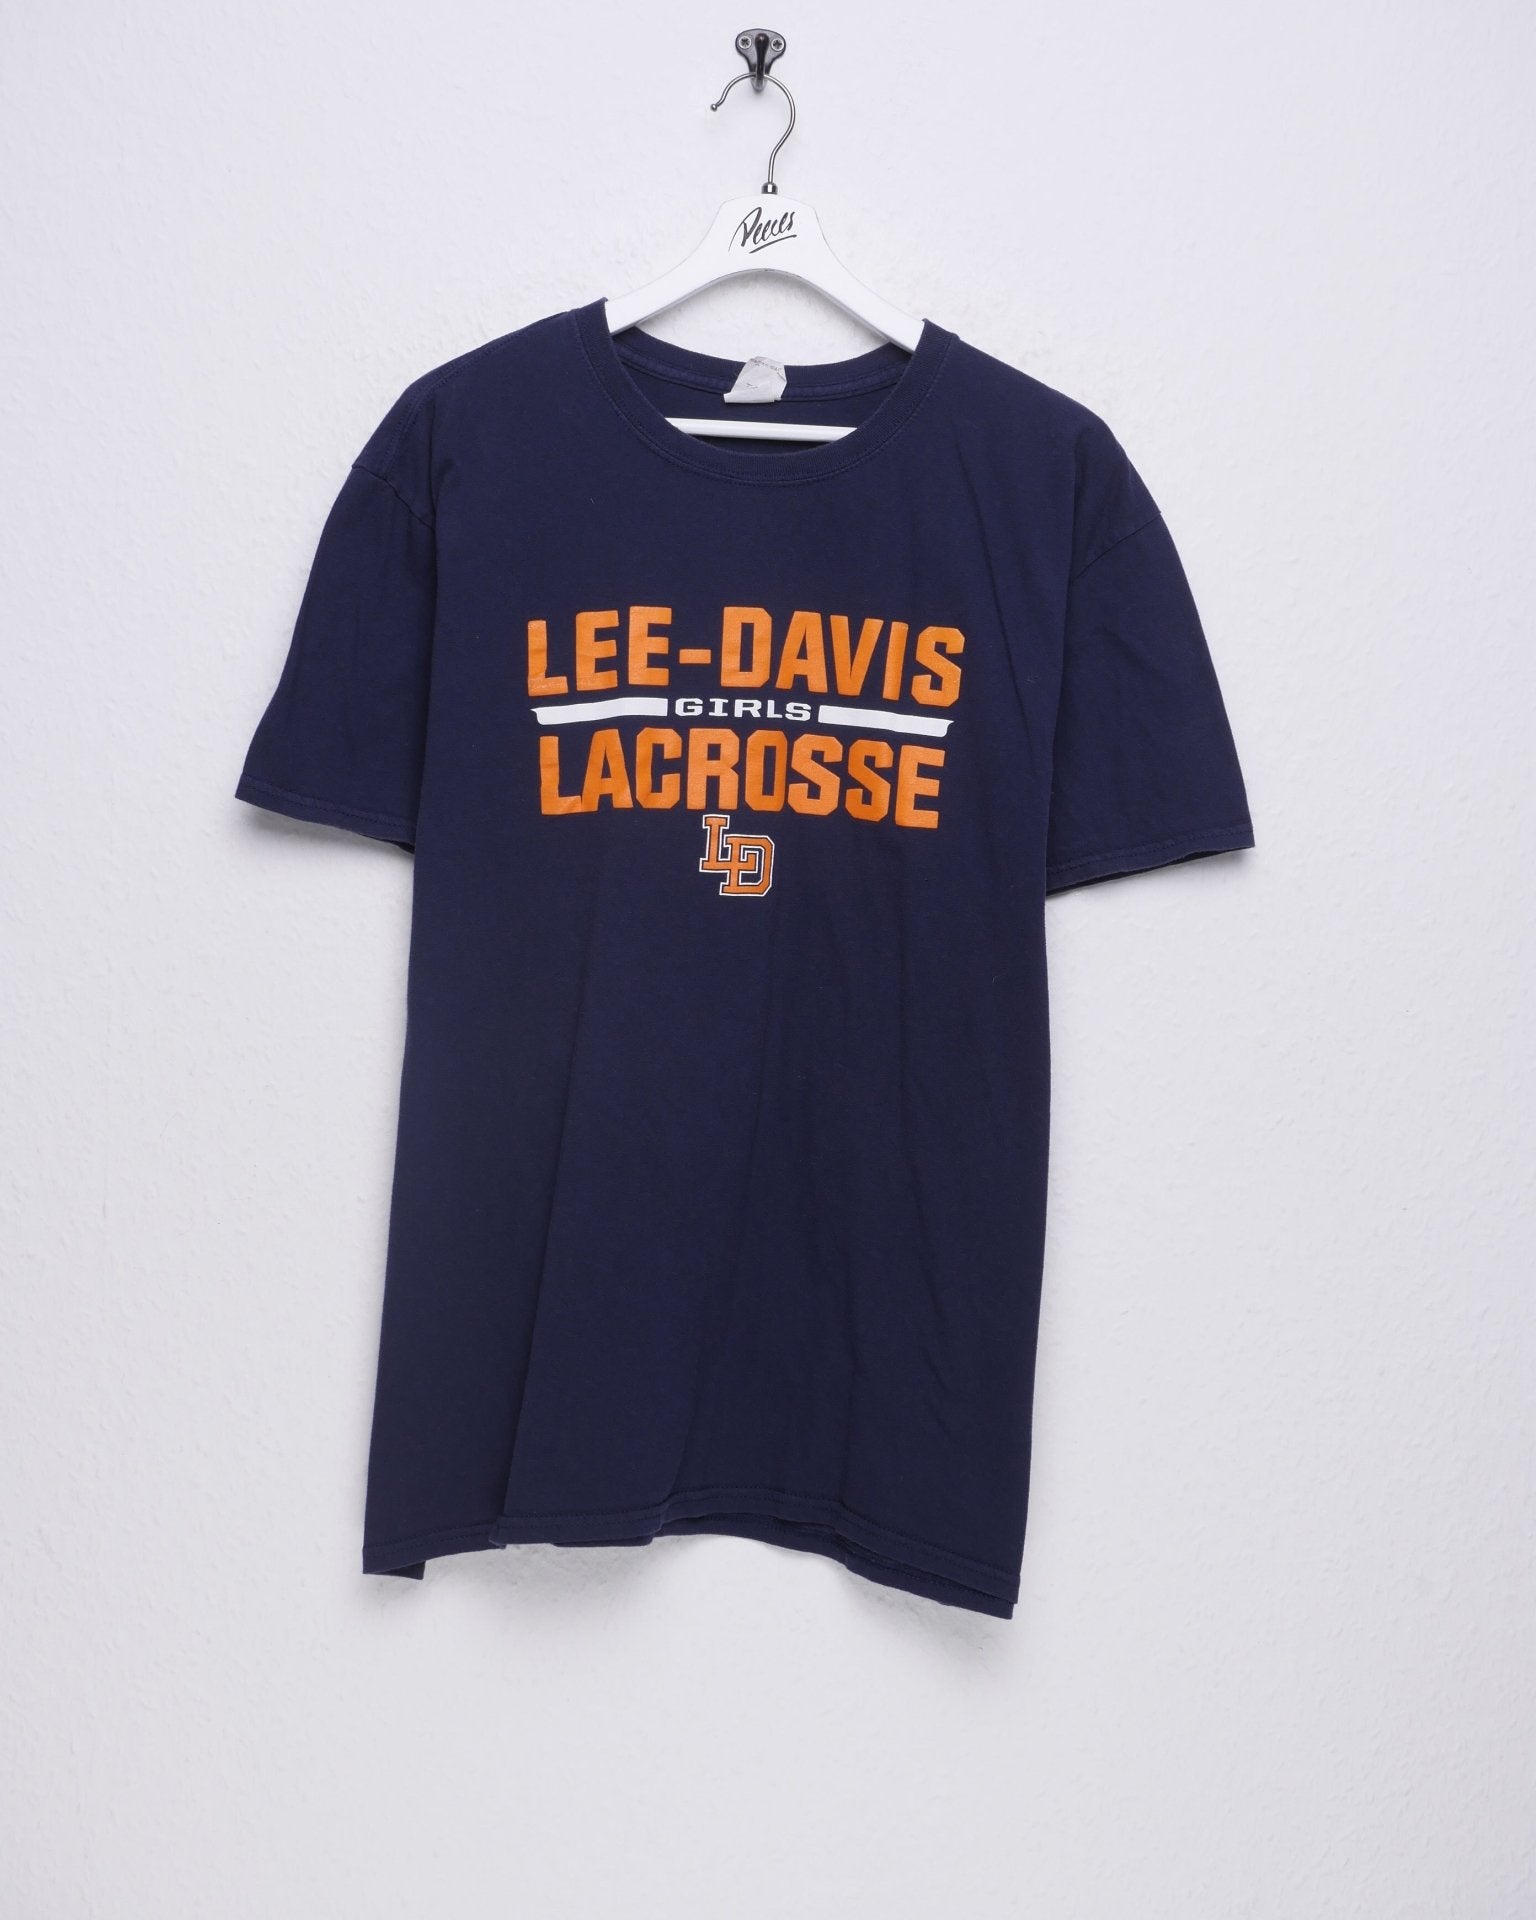 Lee-Davis Girls Lacrosse printed Logo Shirt - Peeces